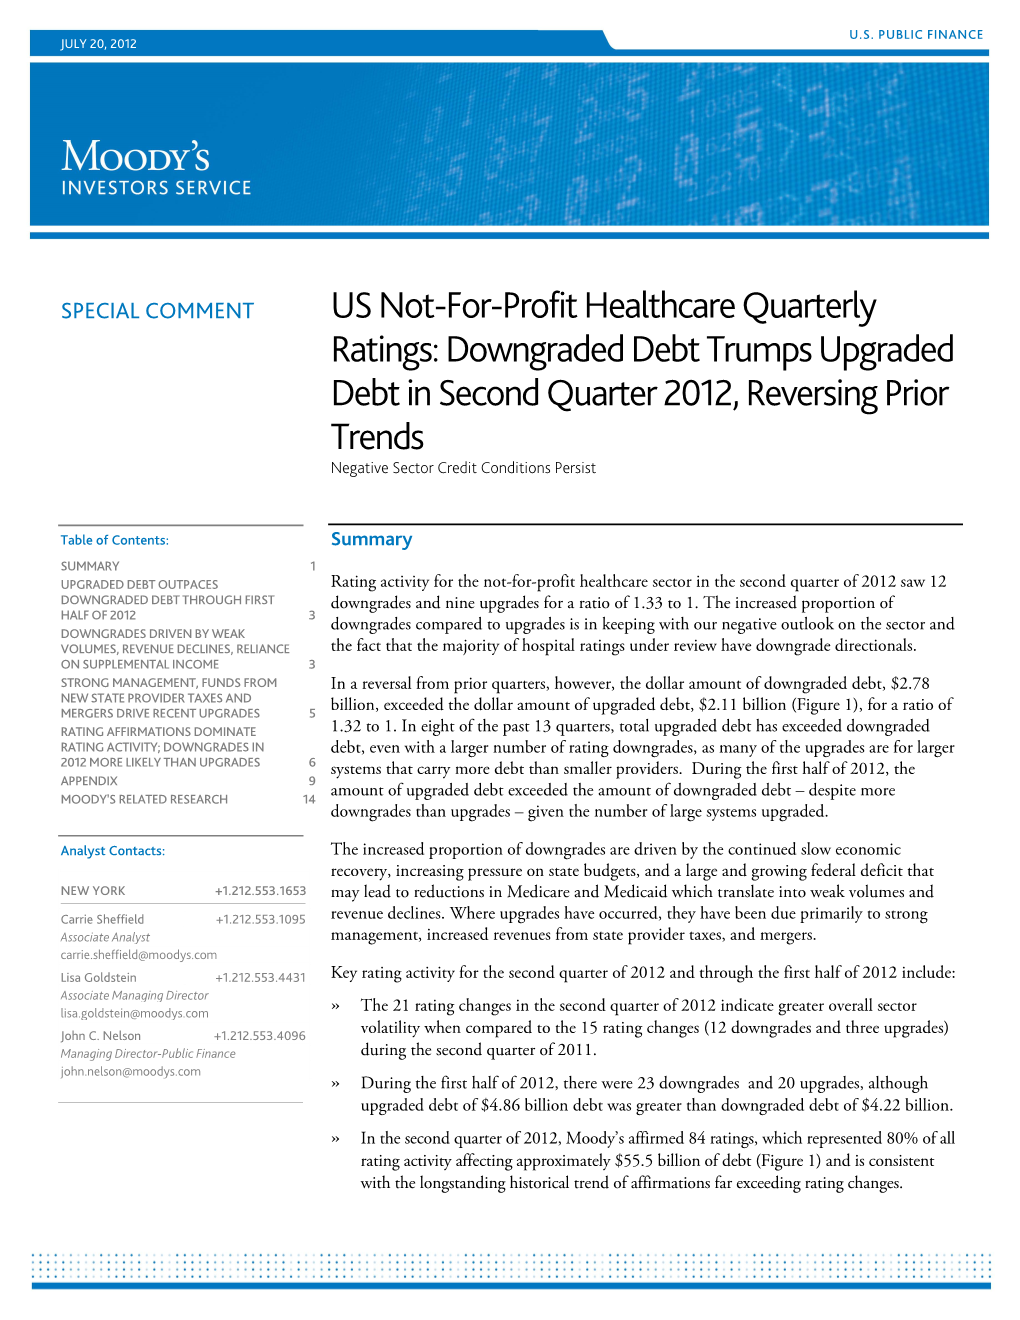 Us Not-For-Profit Healthcare Quarterly Ratings: Downgraded Debt Trumps Upgraded Debt in Second Quarter 2012, Reversing Prior Trends